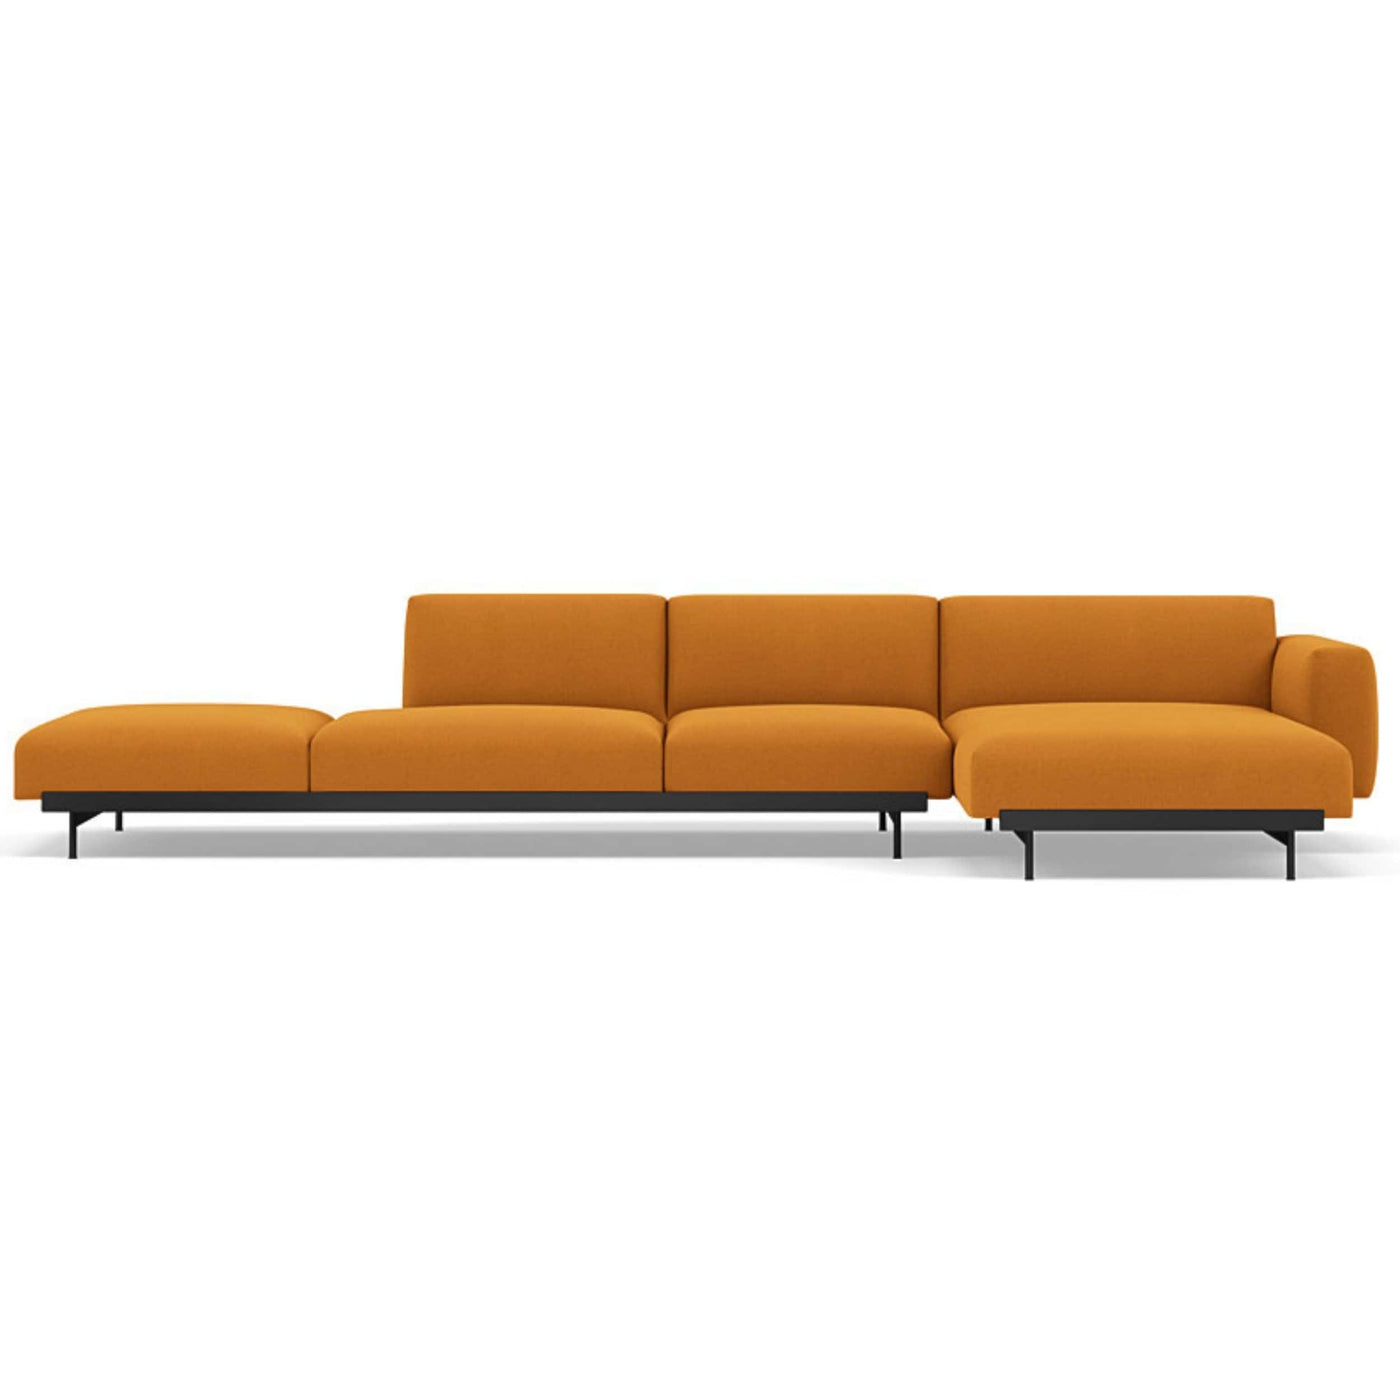 Muuto In Situ Modular 4 Seater Sofa configuration 4 in vidar 472. Made to order from someday designs. #colour_vidar-472